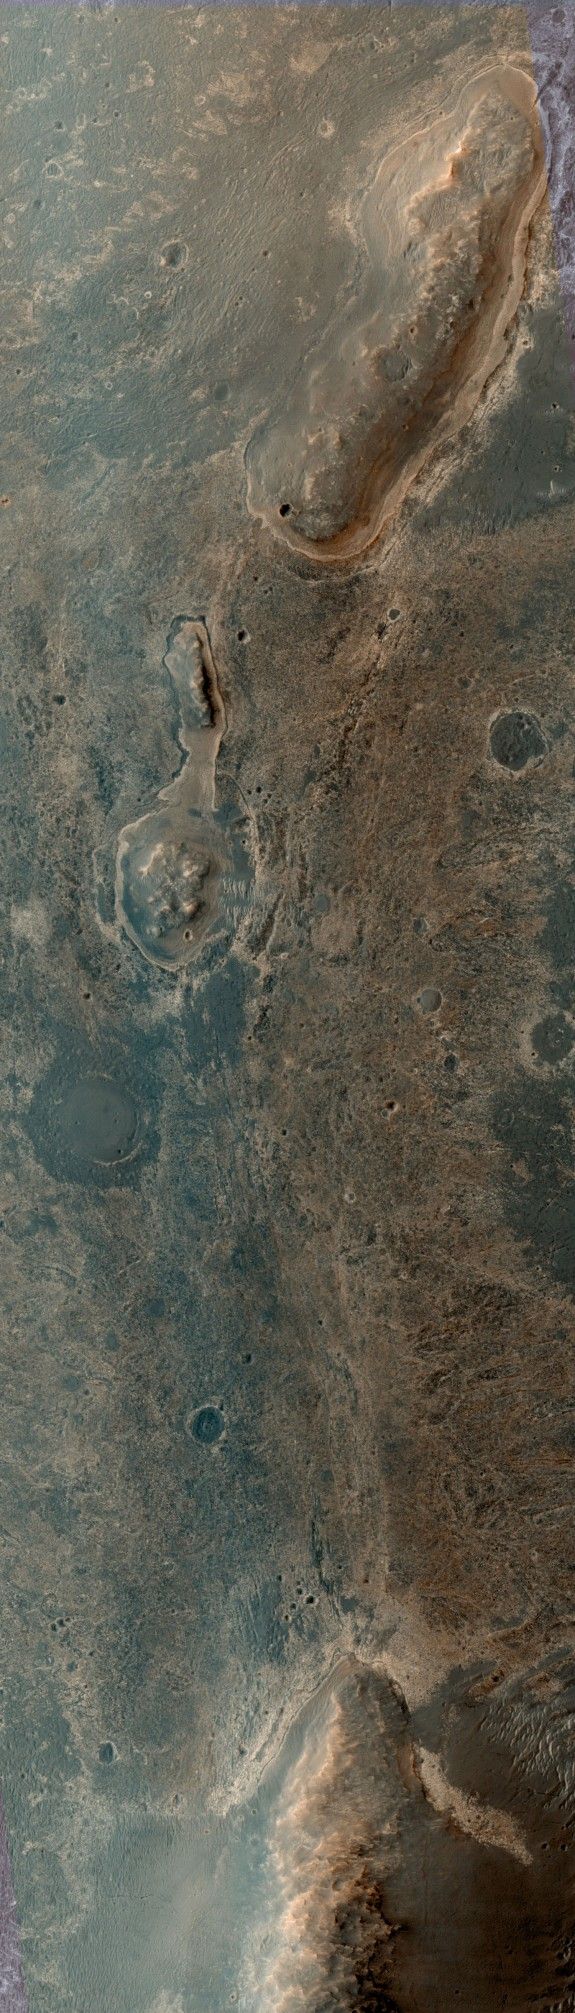 The full HiRISE photo